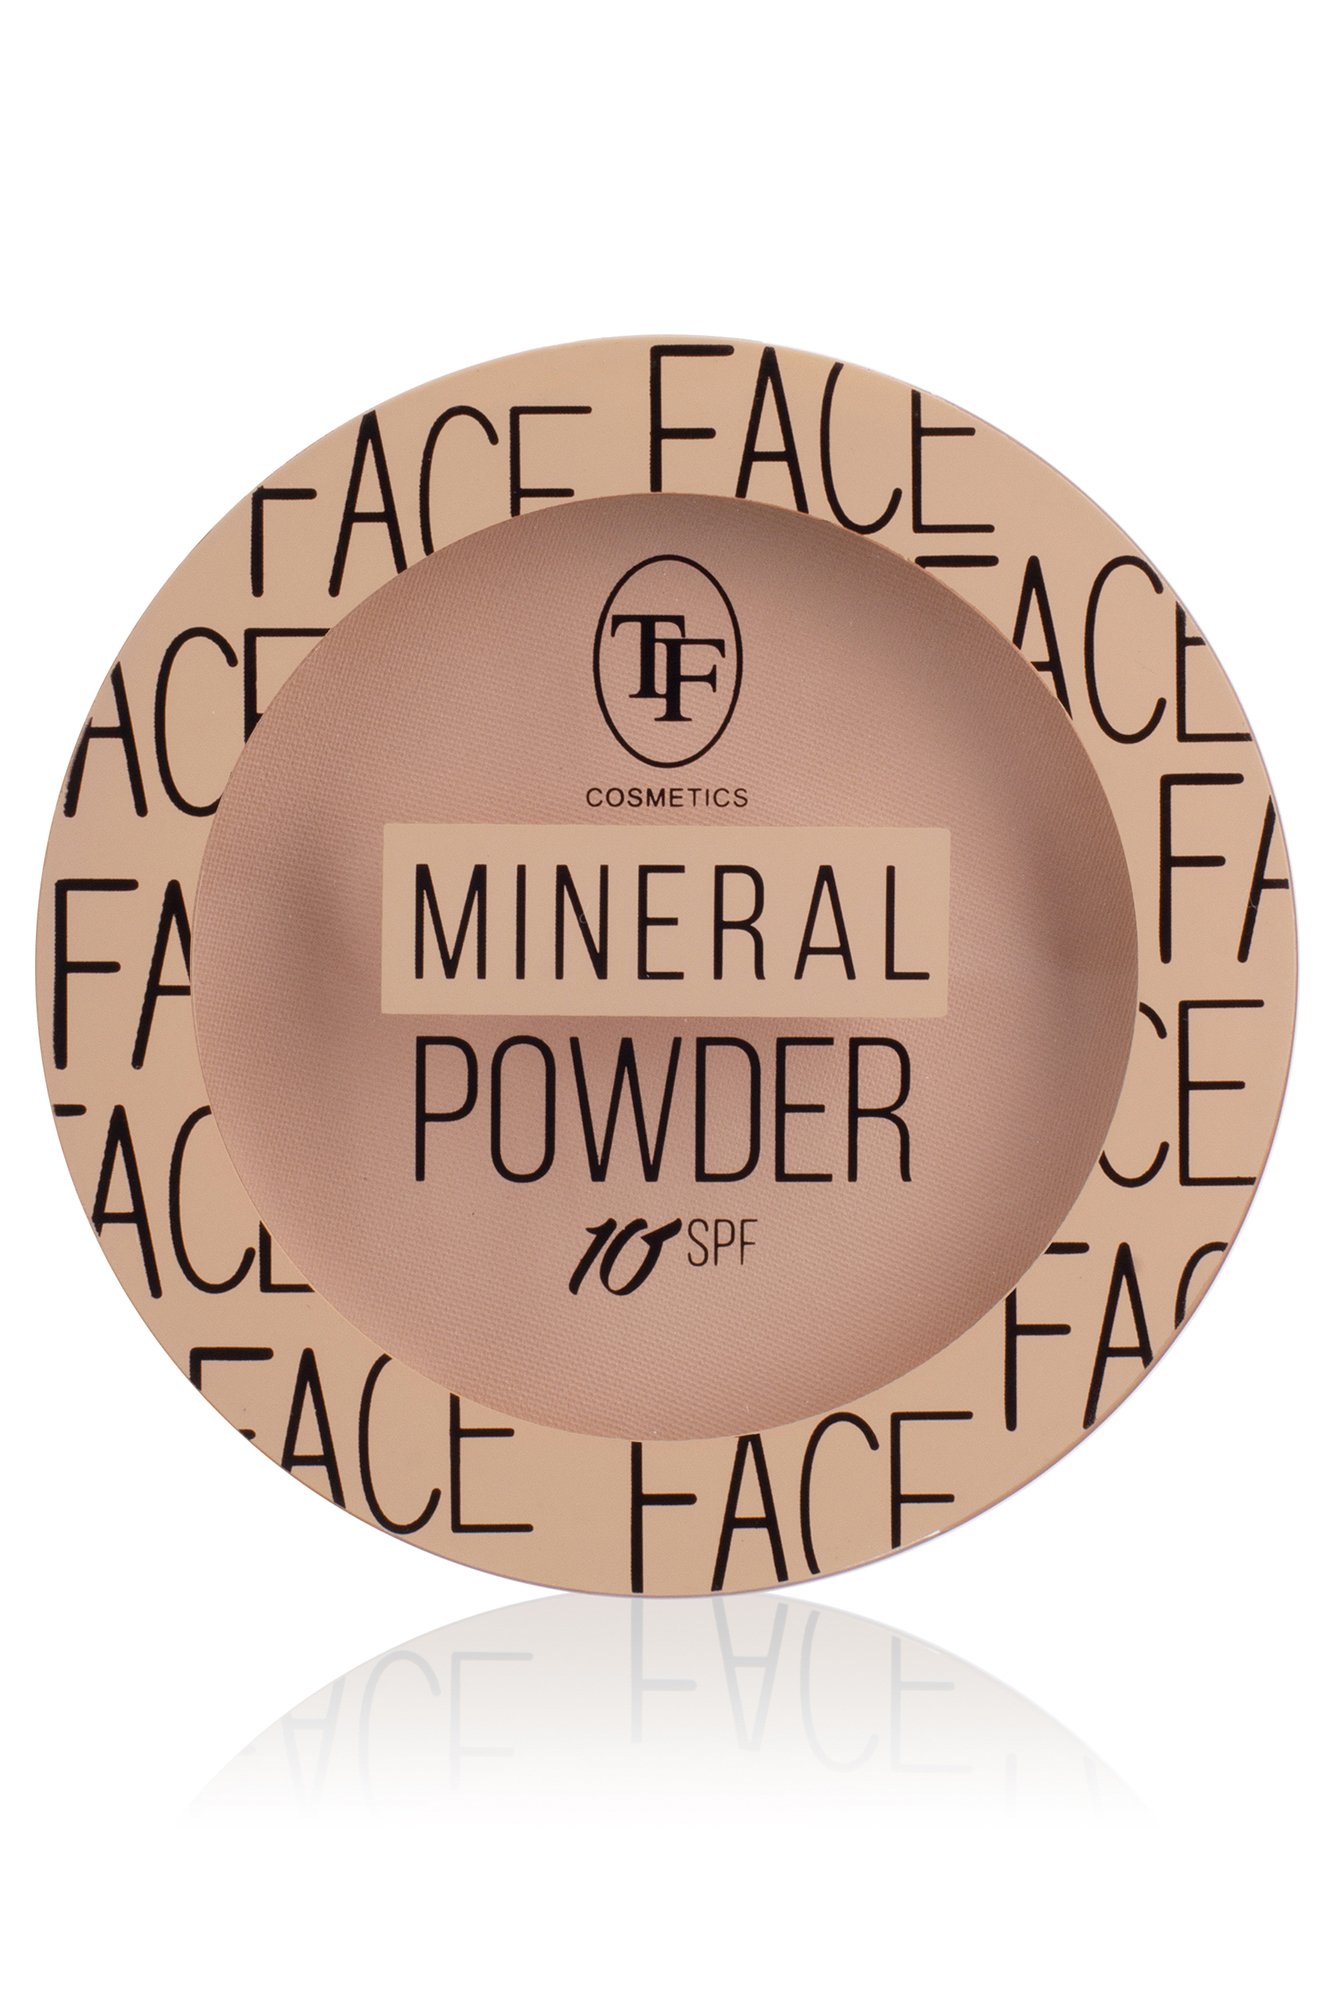 Пудра минеральная Mineral powder т.12 13 г TF